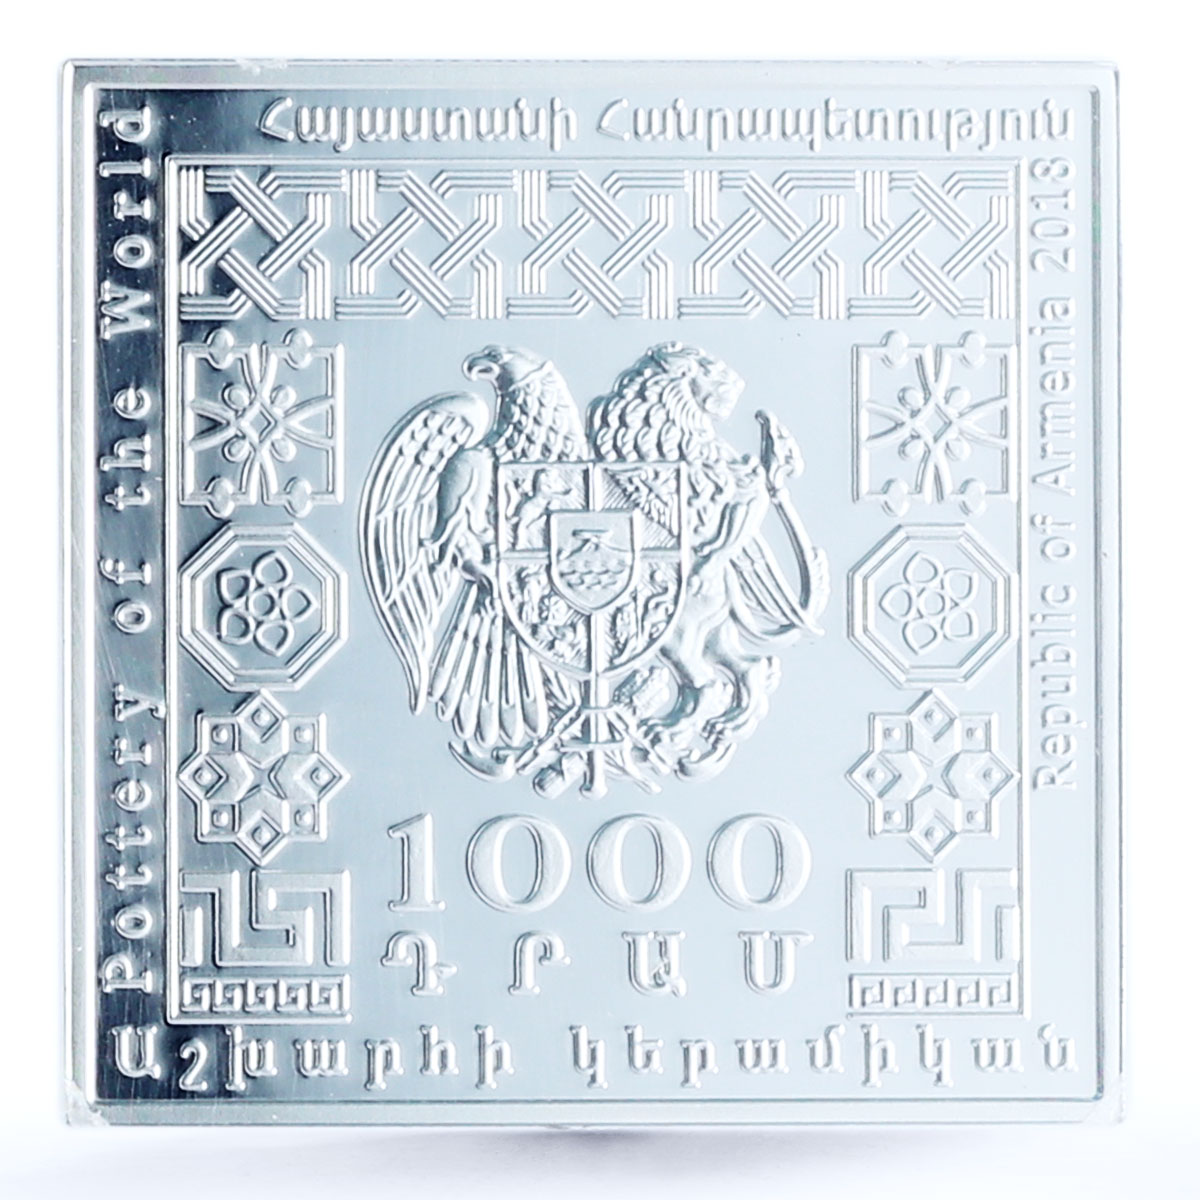 Armenia 1000 dram Folk Traditions Armenian Pottery PR70 PCGS silver coin 2018